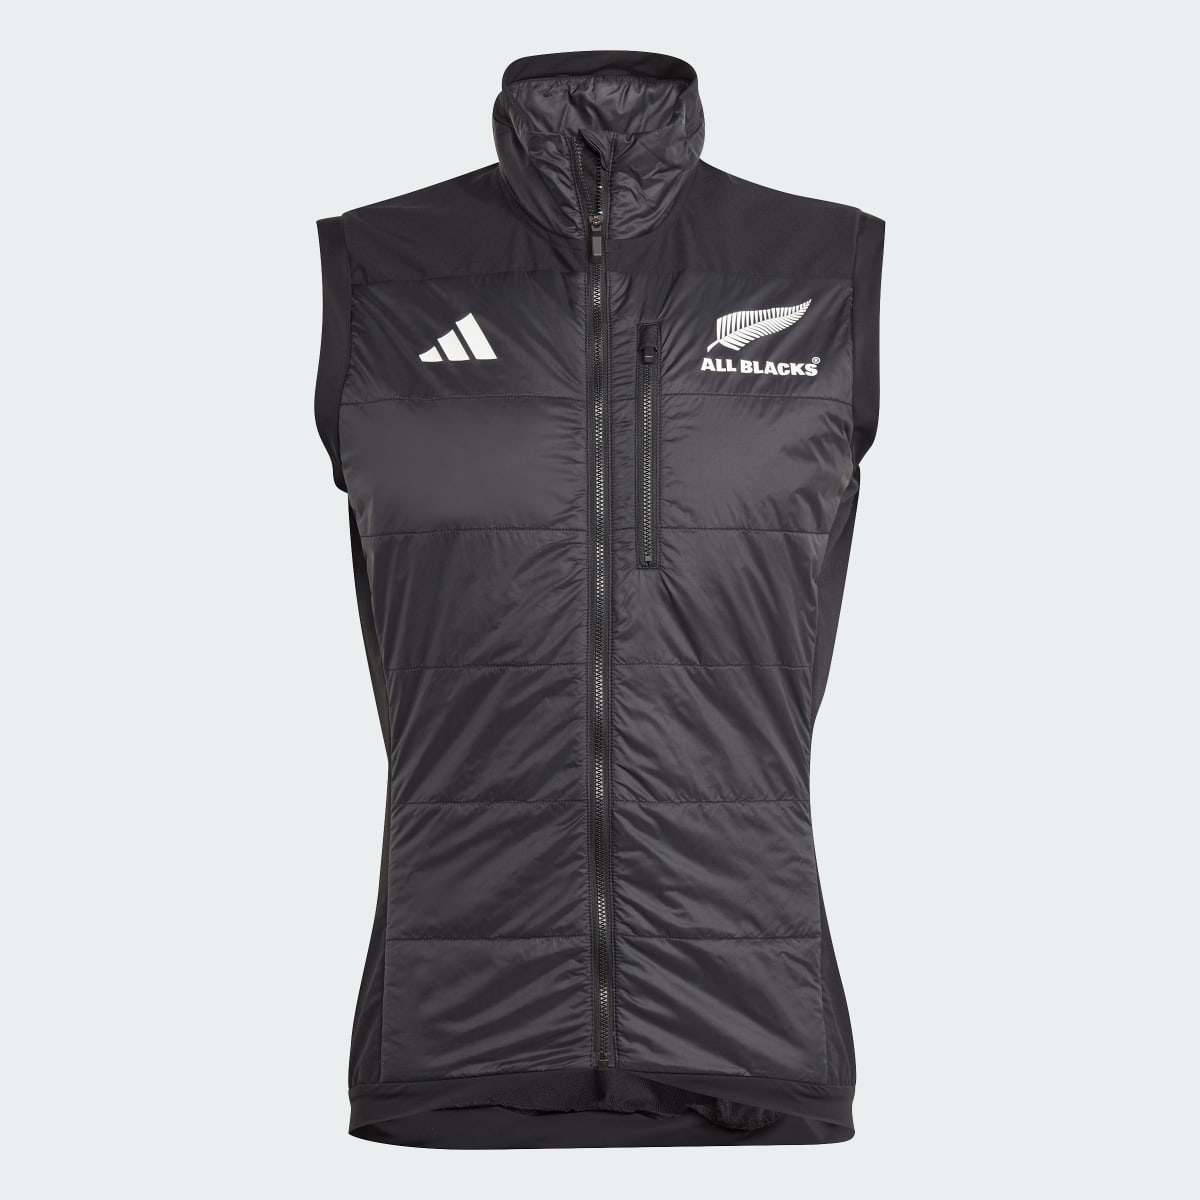 Adidas All Blacks Rugby Filled Vest. 6